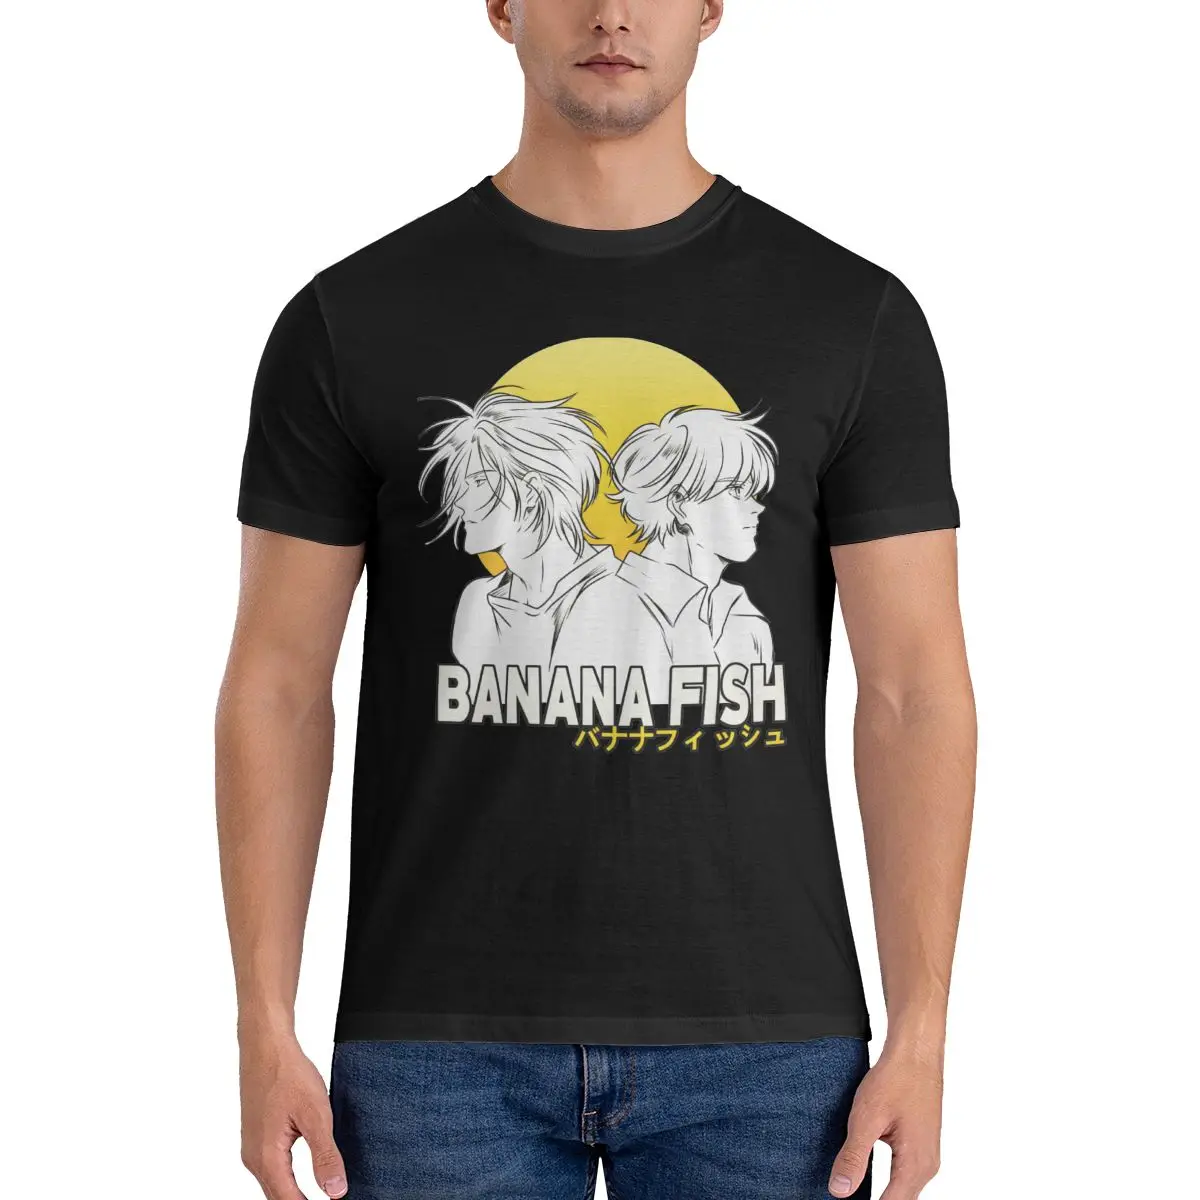 

BANANA FISH Anime Manga T Shirts ash lynx eiji okumura back boys Cool Graphic Couple T-Shirt 100% Cotton Tees Short Sleeve Tops